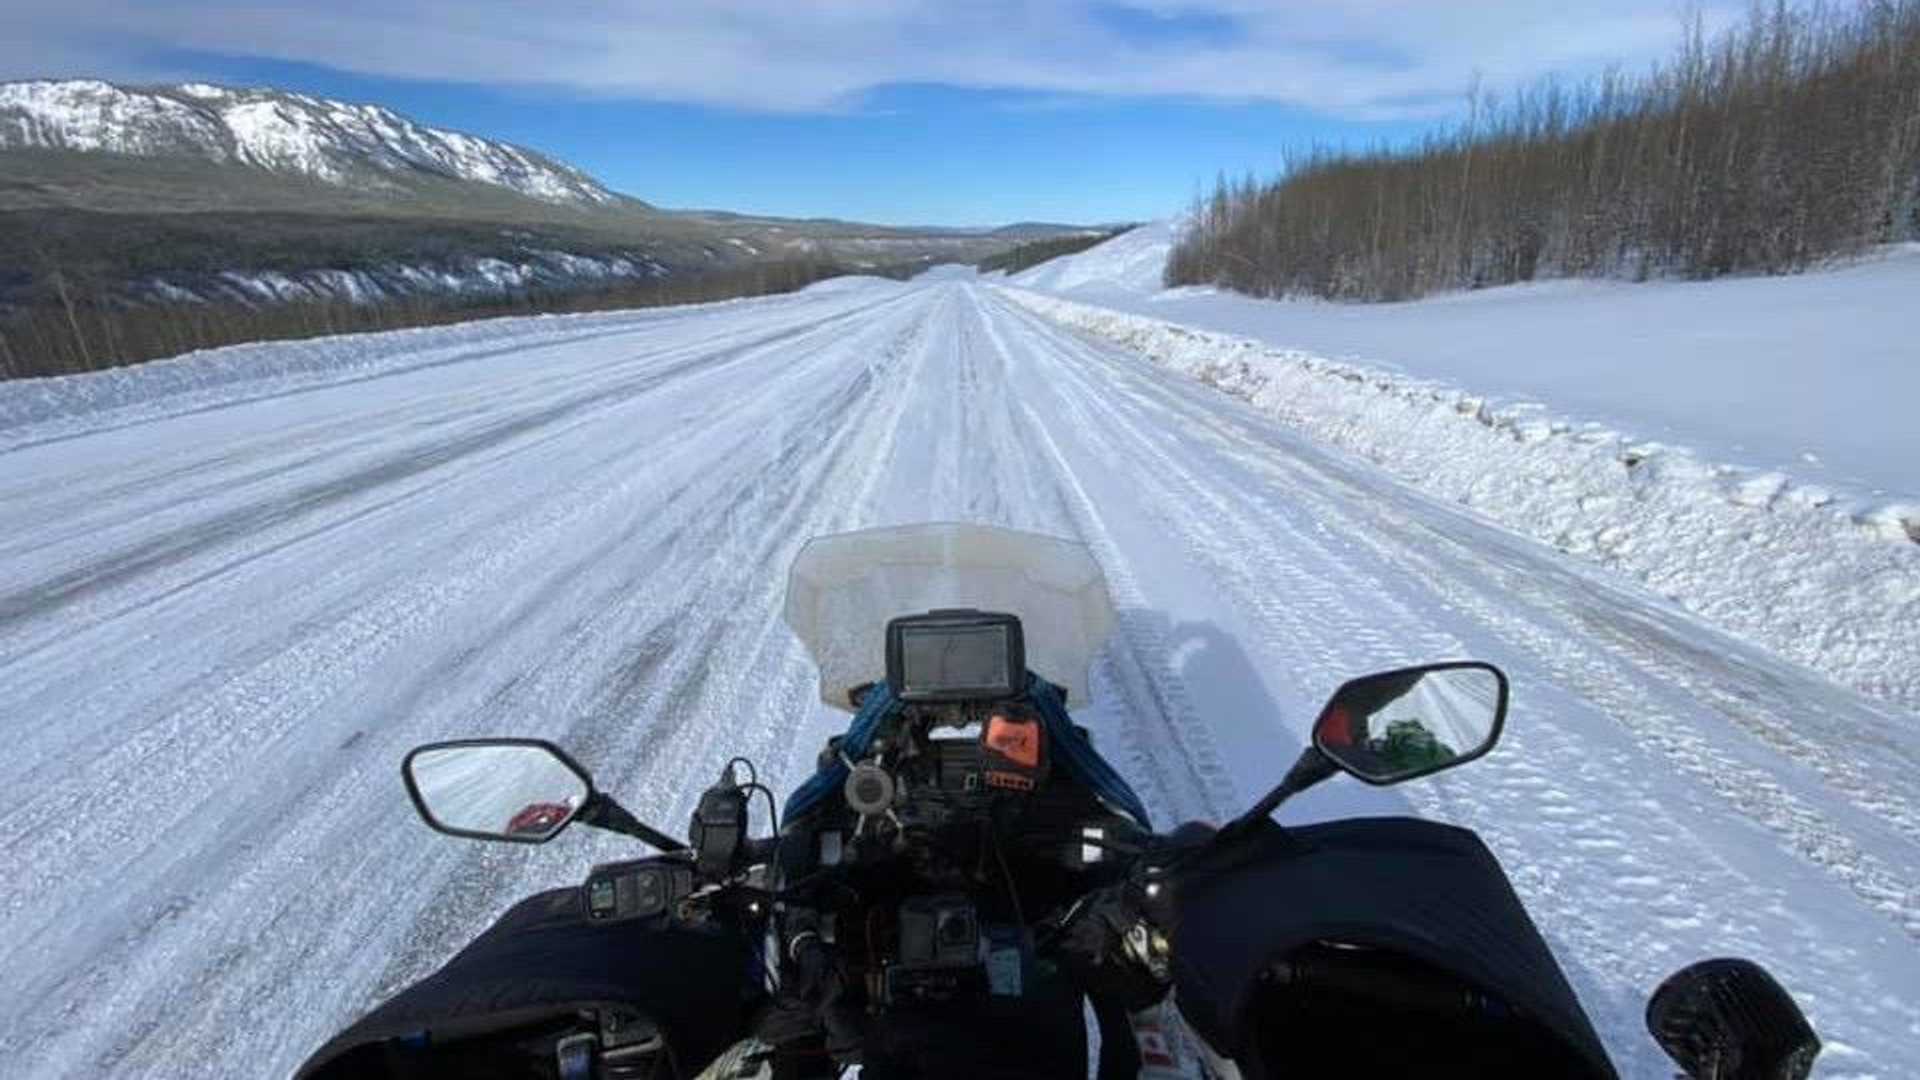 Alaskan rider on the main highway